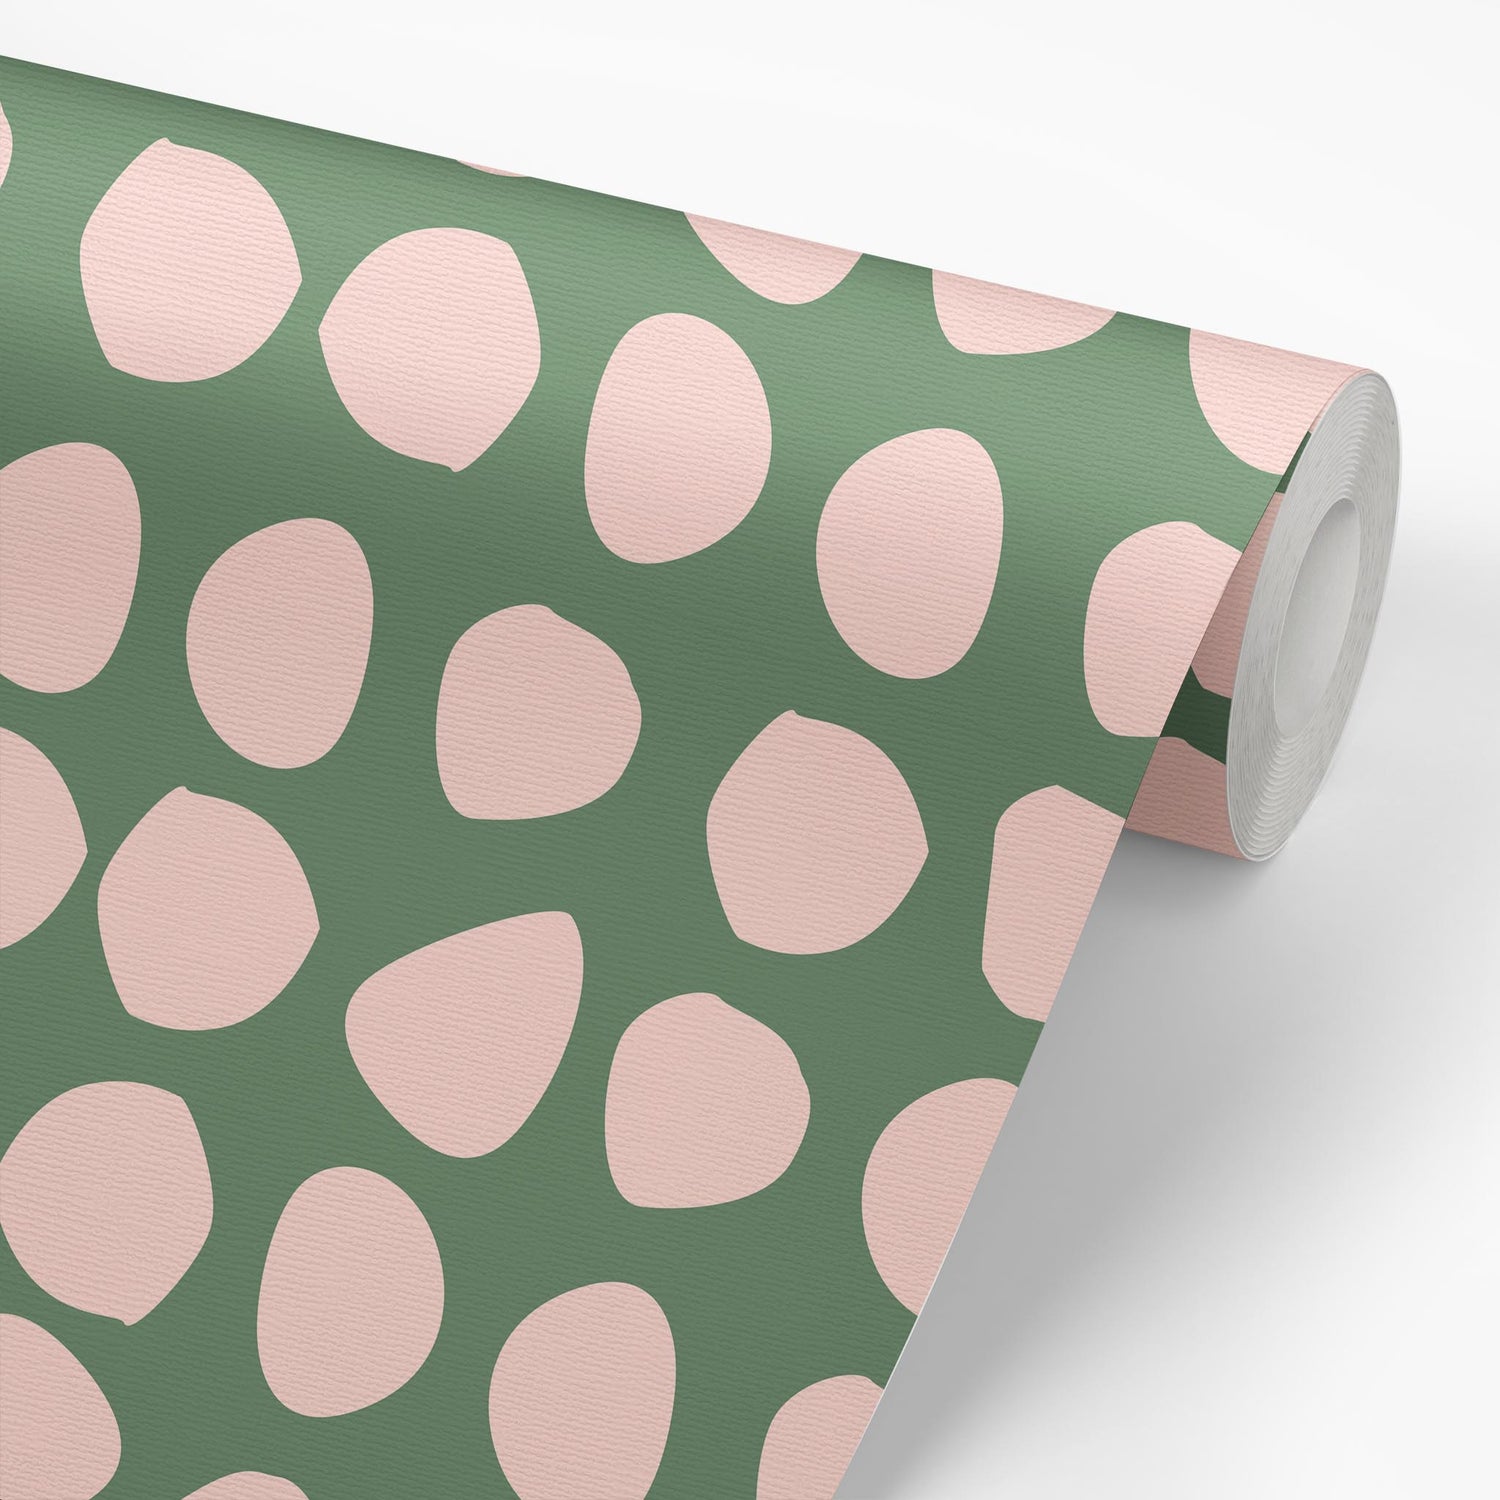 Sample roll of Organic Dots Wallpaper in Green by artist Brenda Bird